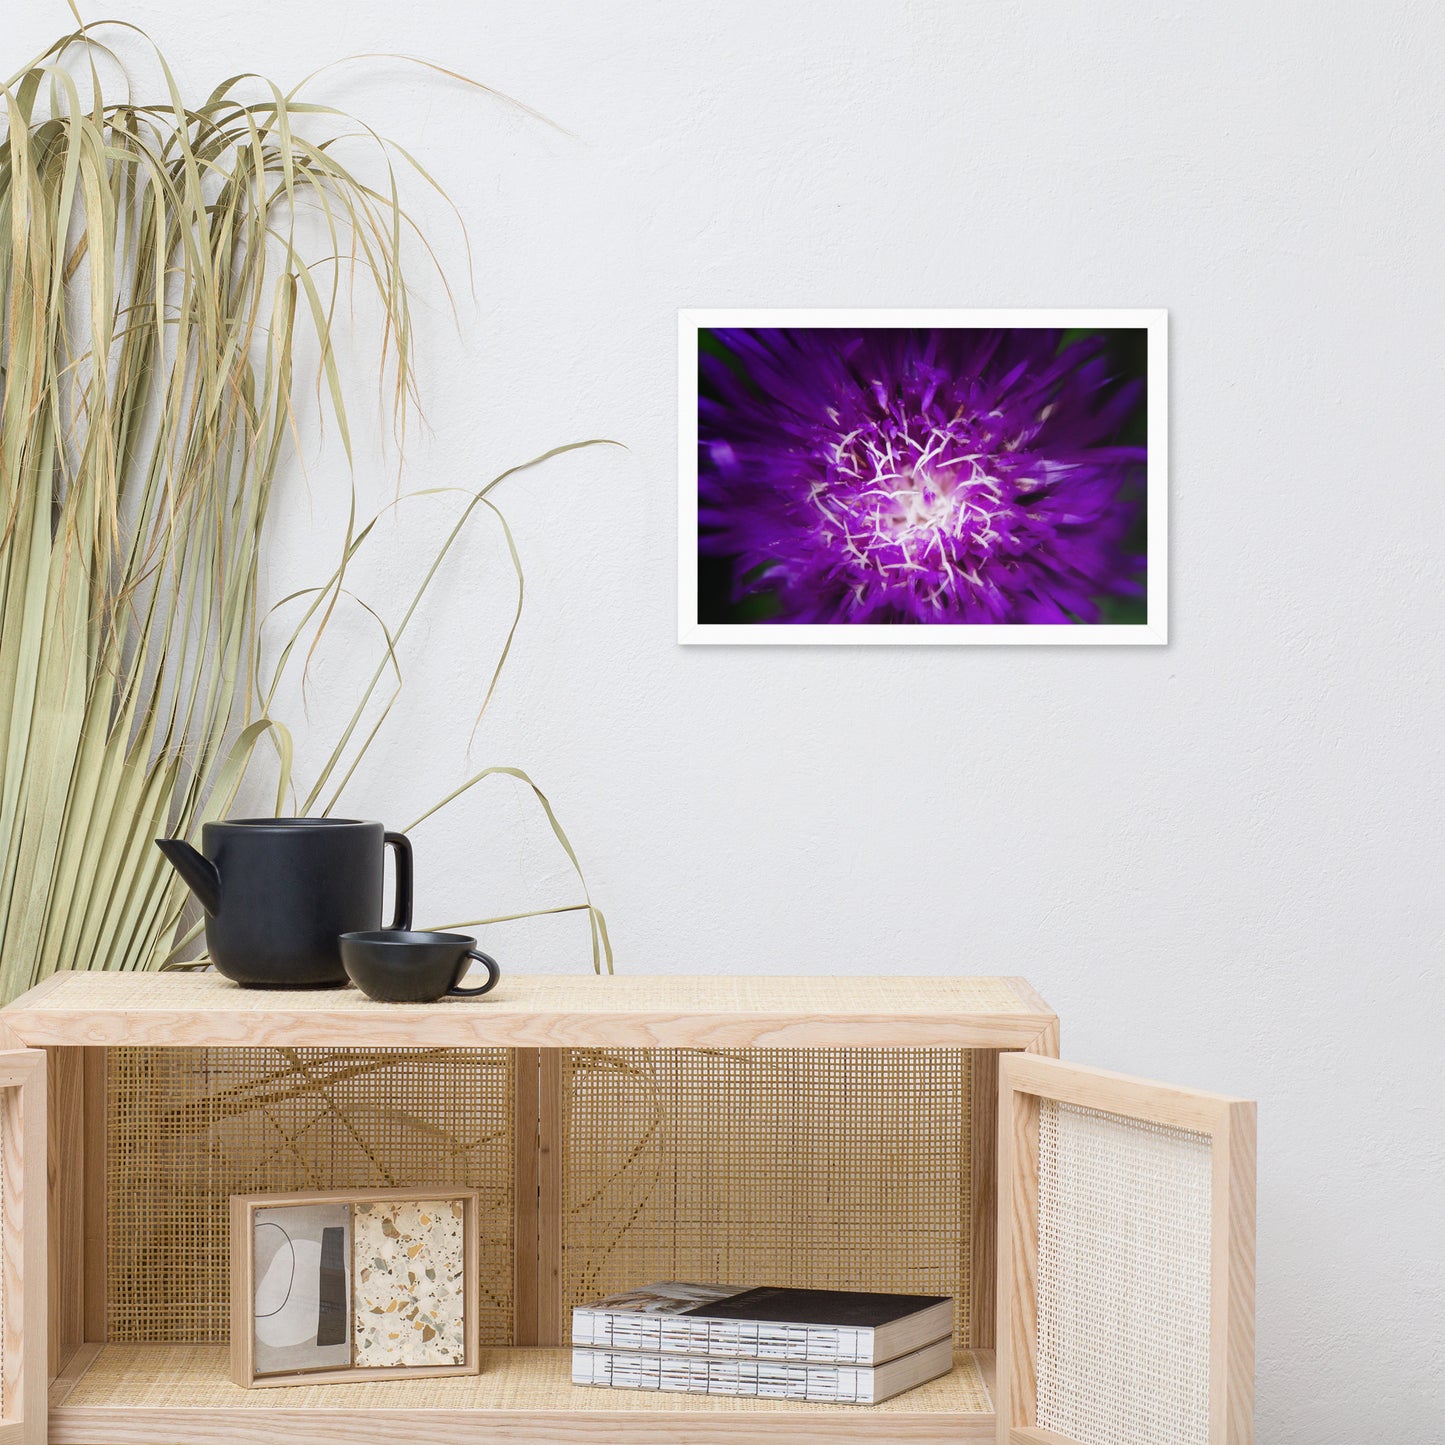 Purple Wall Decor Living Room: Purple Abstract Flower - Botanical / Floral / Flora / Flowers / Nature Photograph Framed Wall Art Print - Artwork - Wall Decor